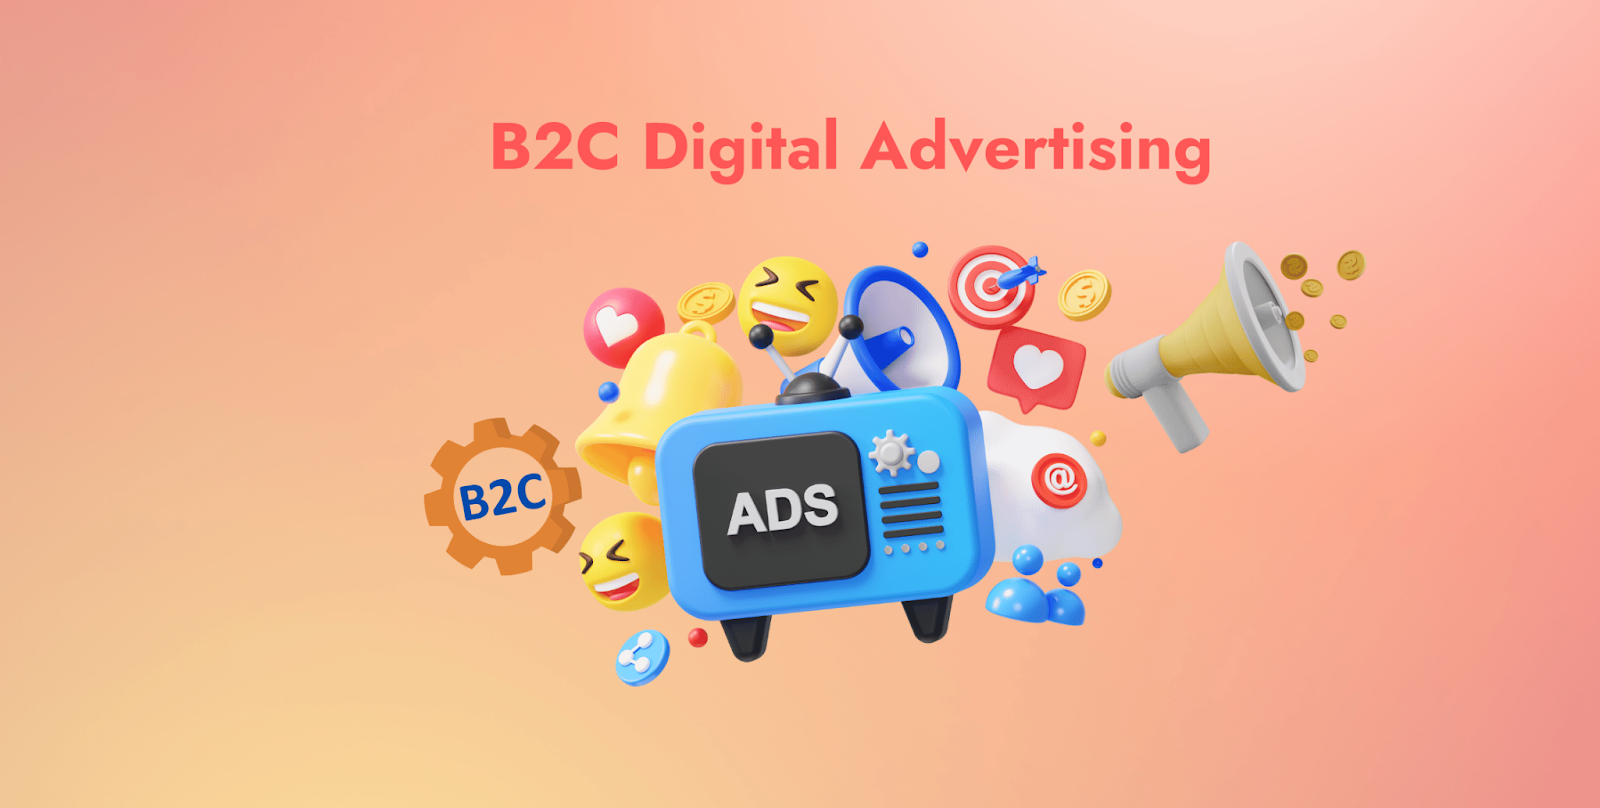 B2C Digital Advertising